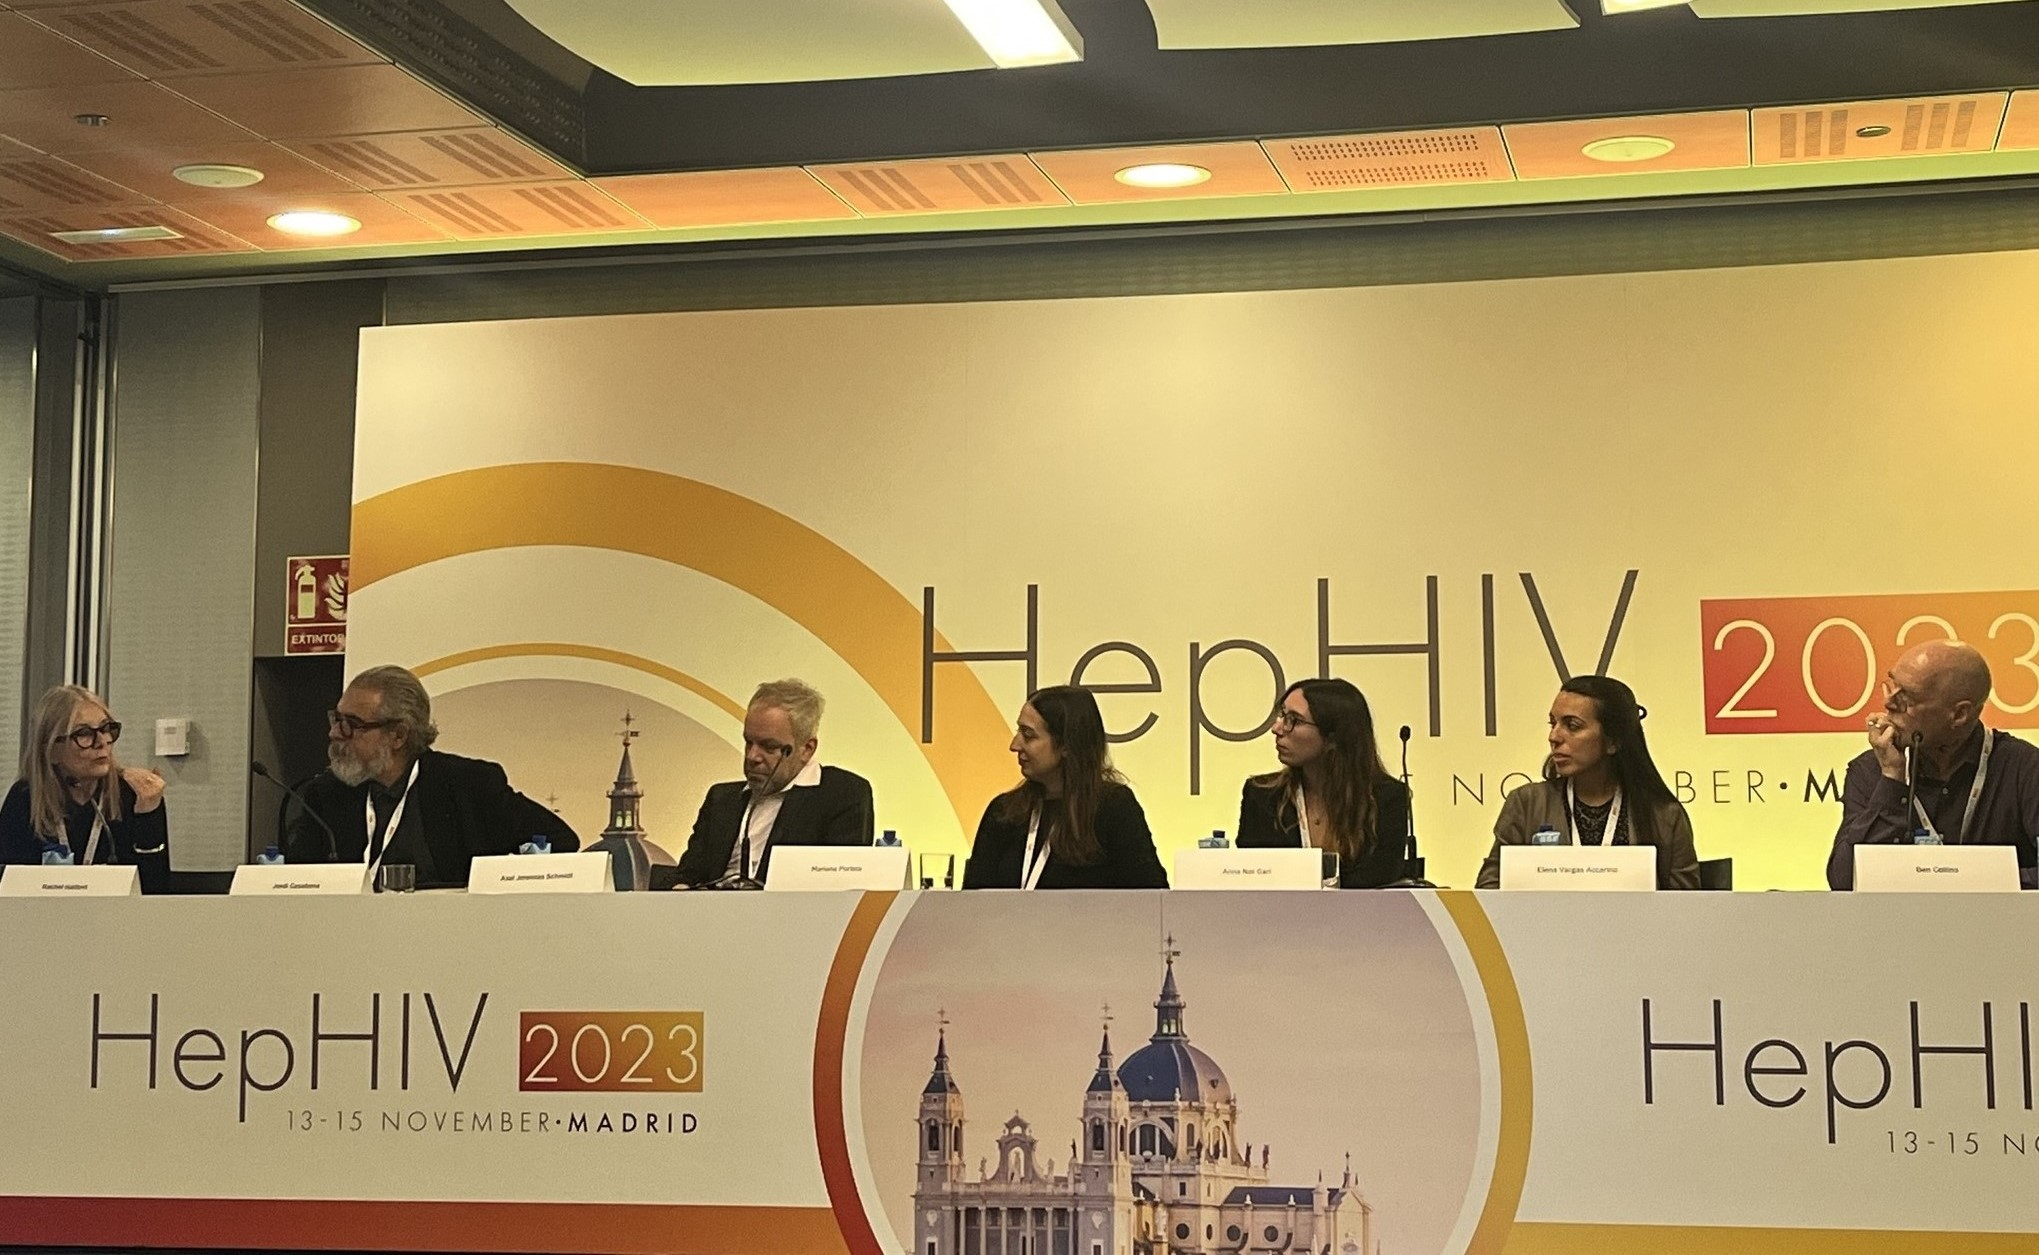 HepHIV 2023 Madrid Conference